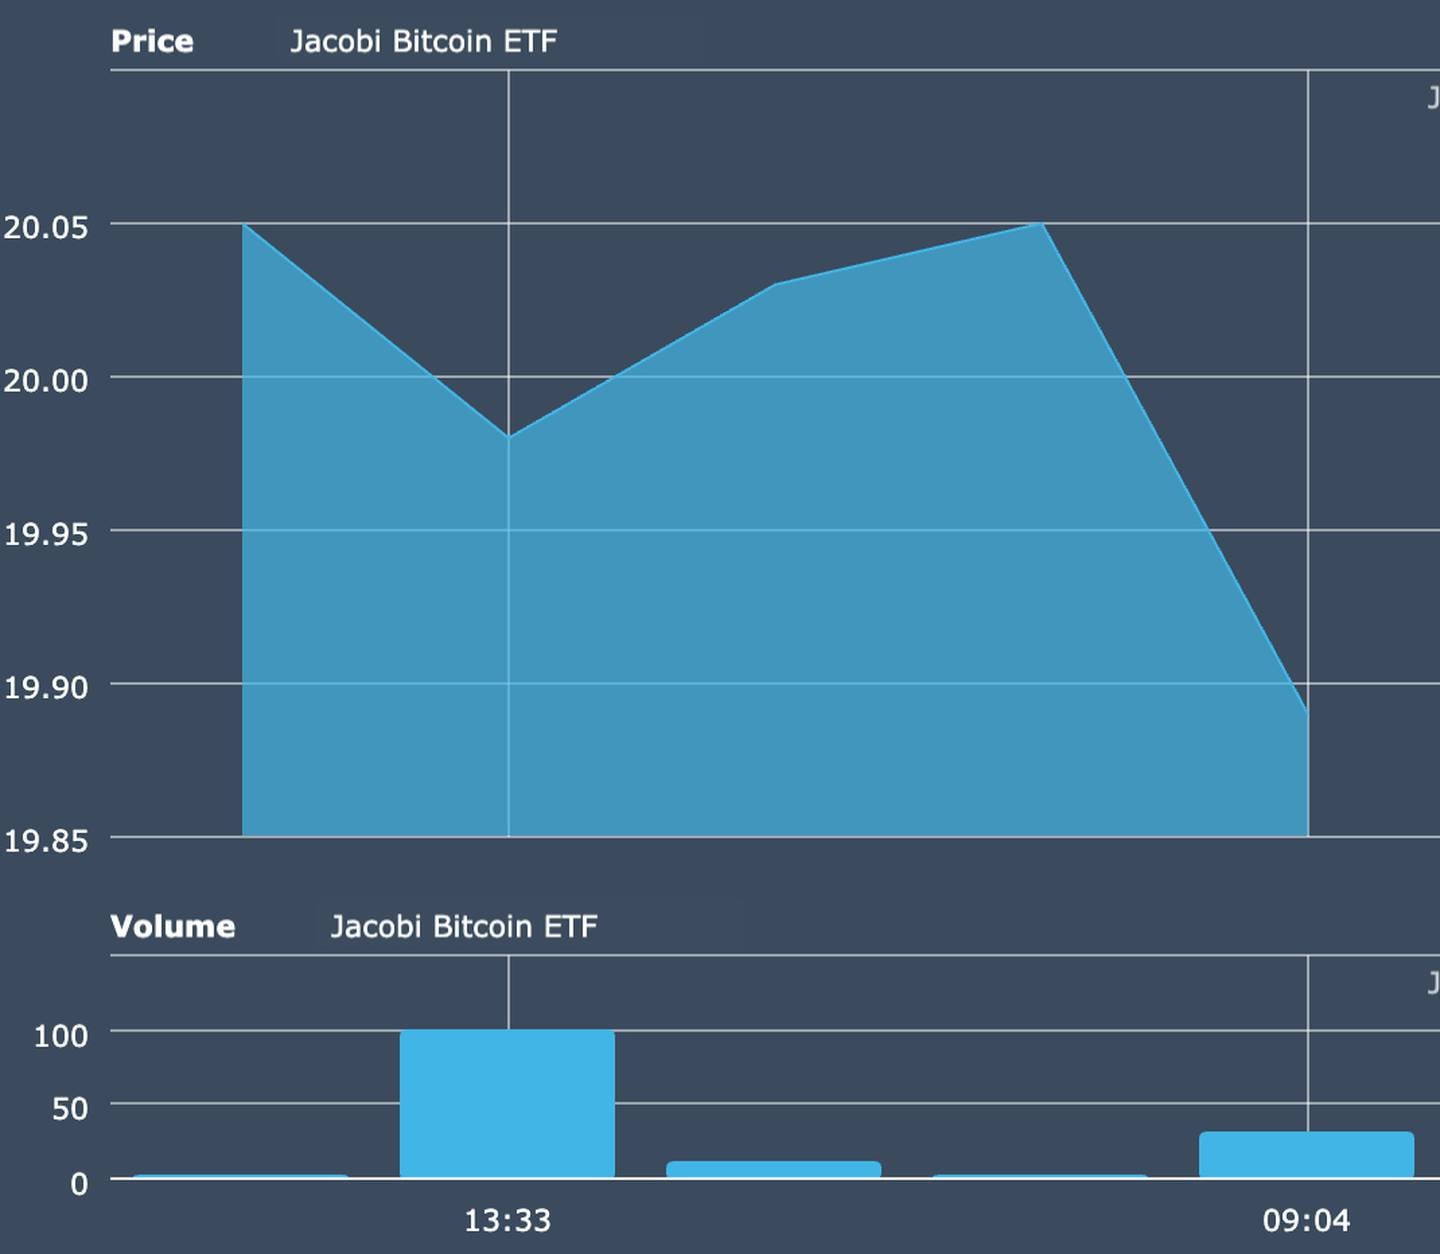 Jacobi Bitcoin ETF volume and price action